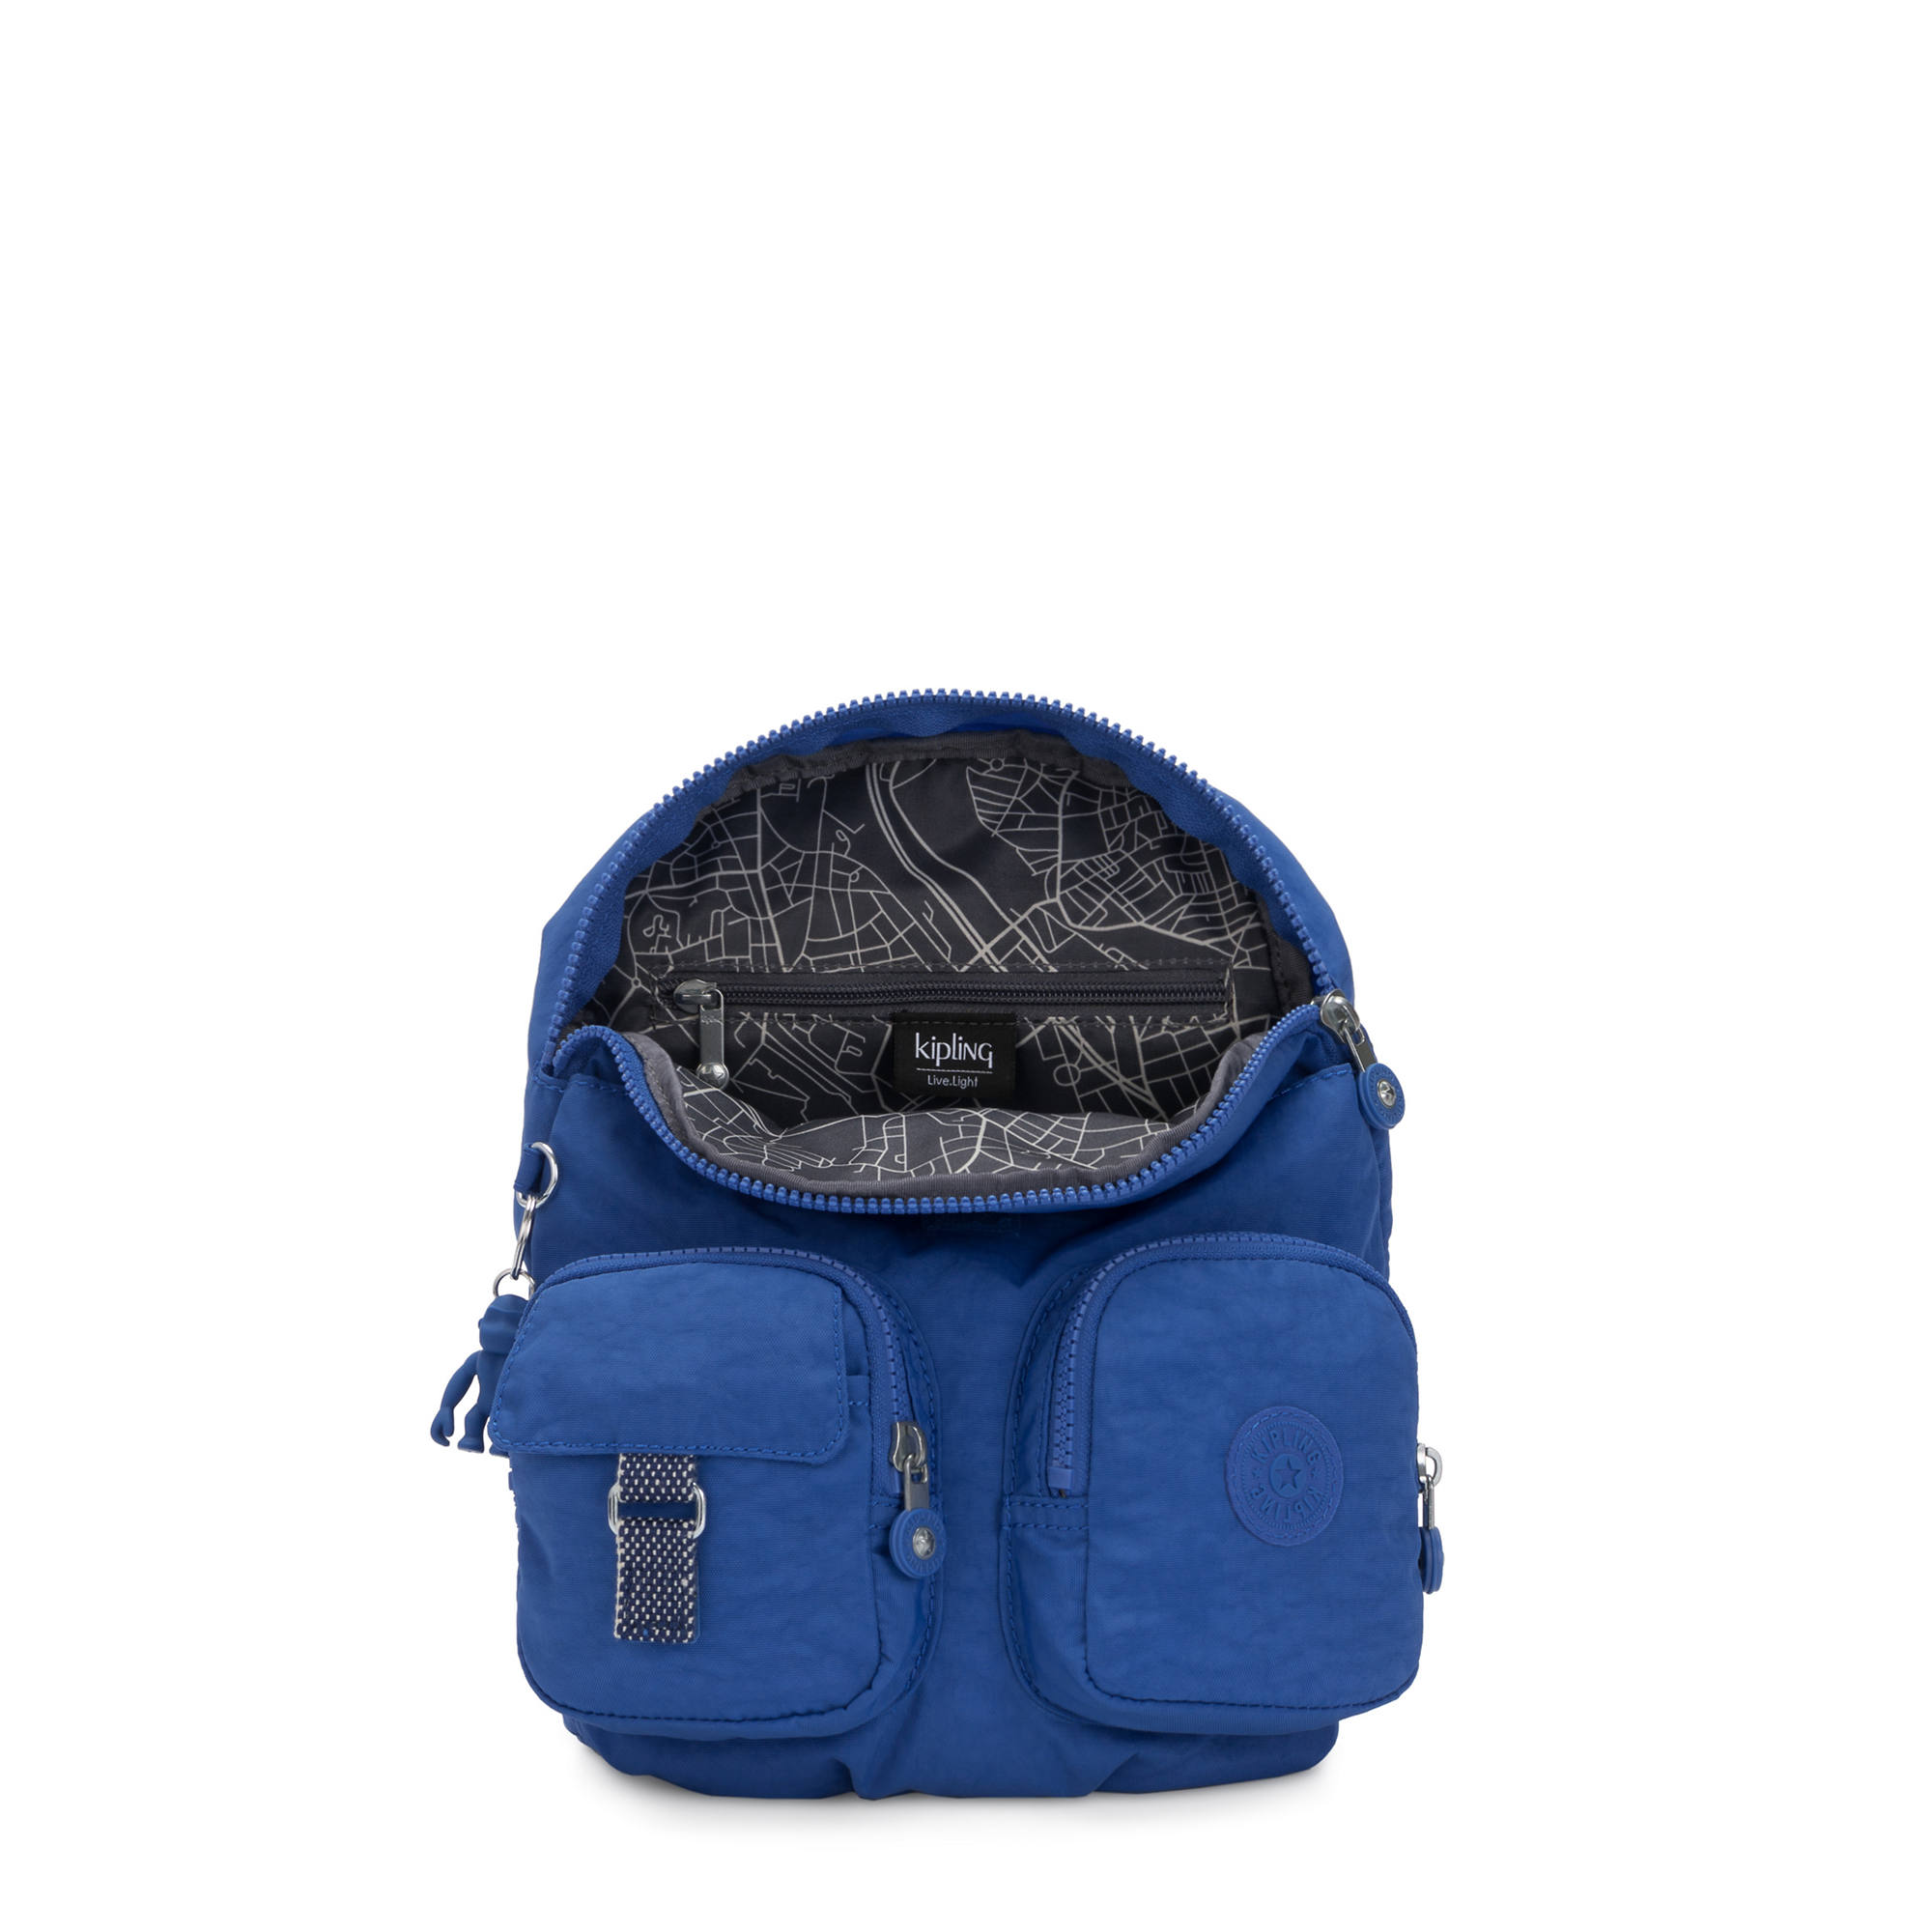 Kipling Lovebug Small Backpack Persian JEWEL for sale online | eBay